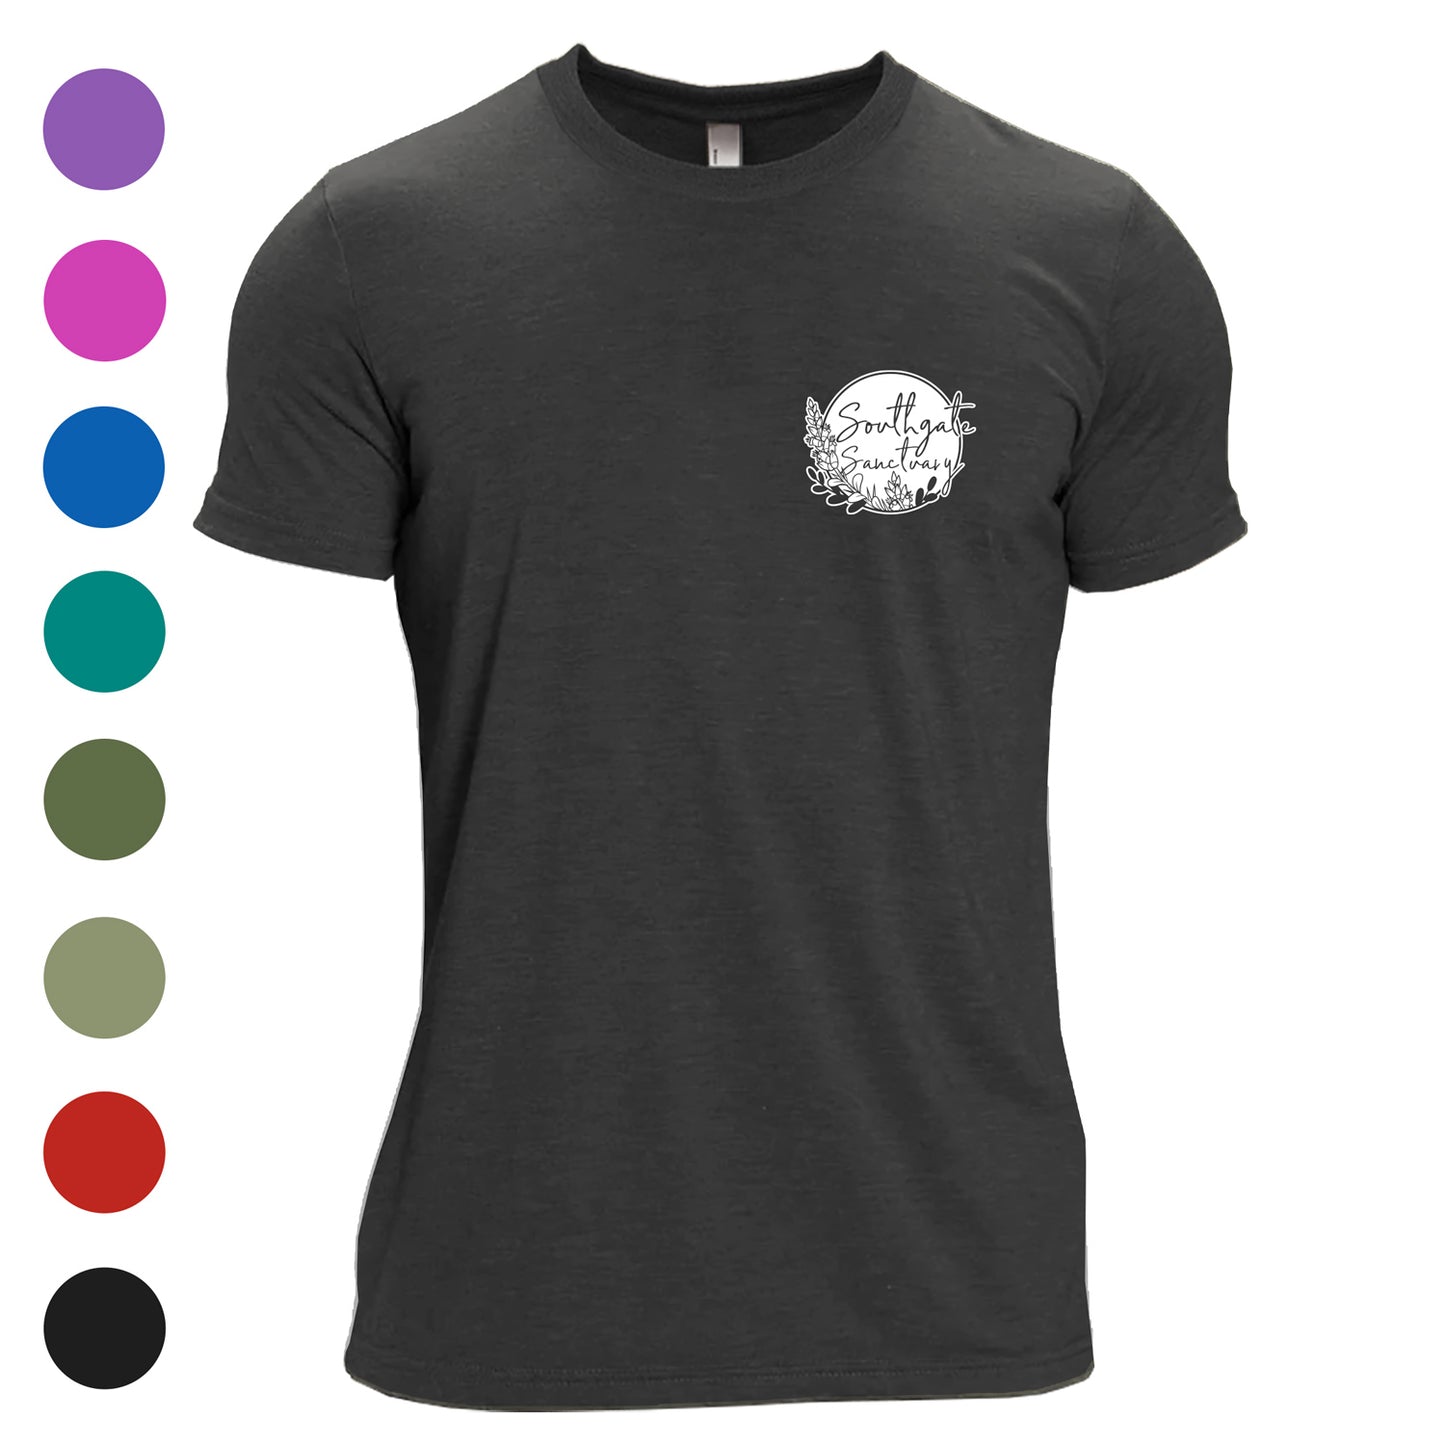 Unisex Southgate Sanctuary Tri-Blend T-Shirt - Available in 9 Colors